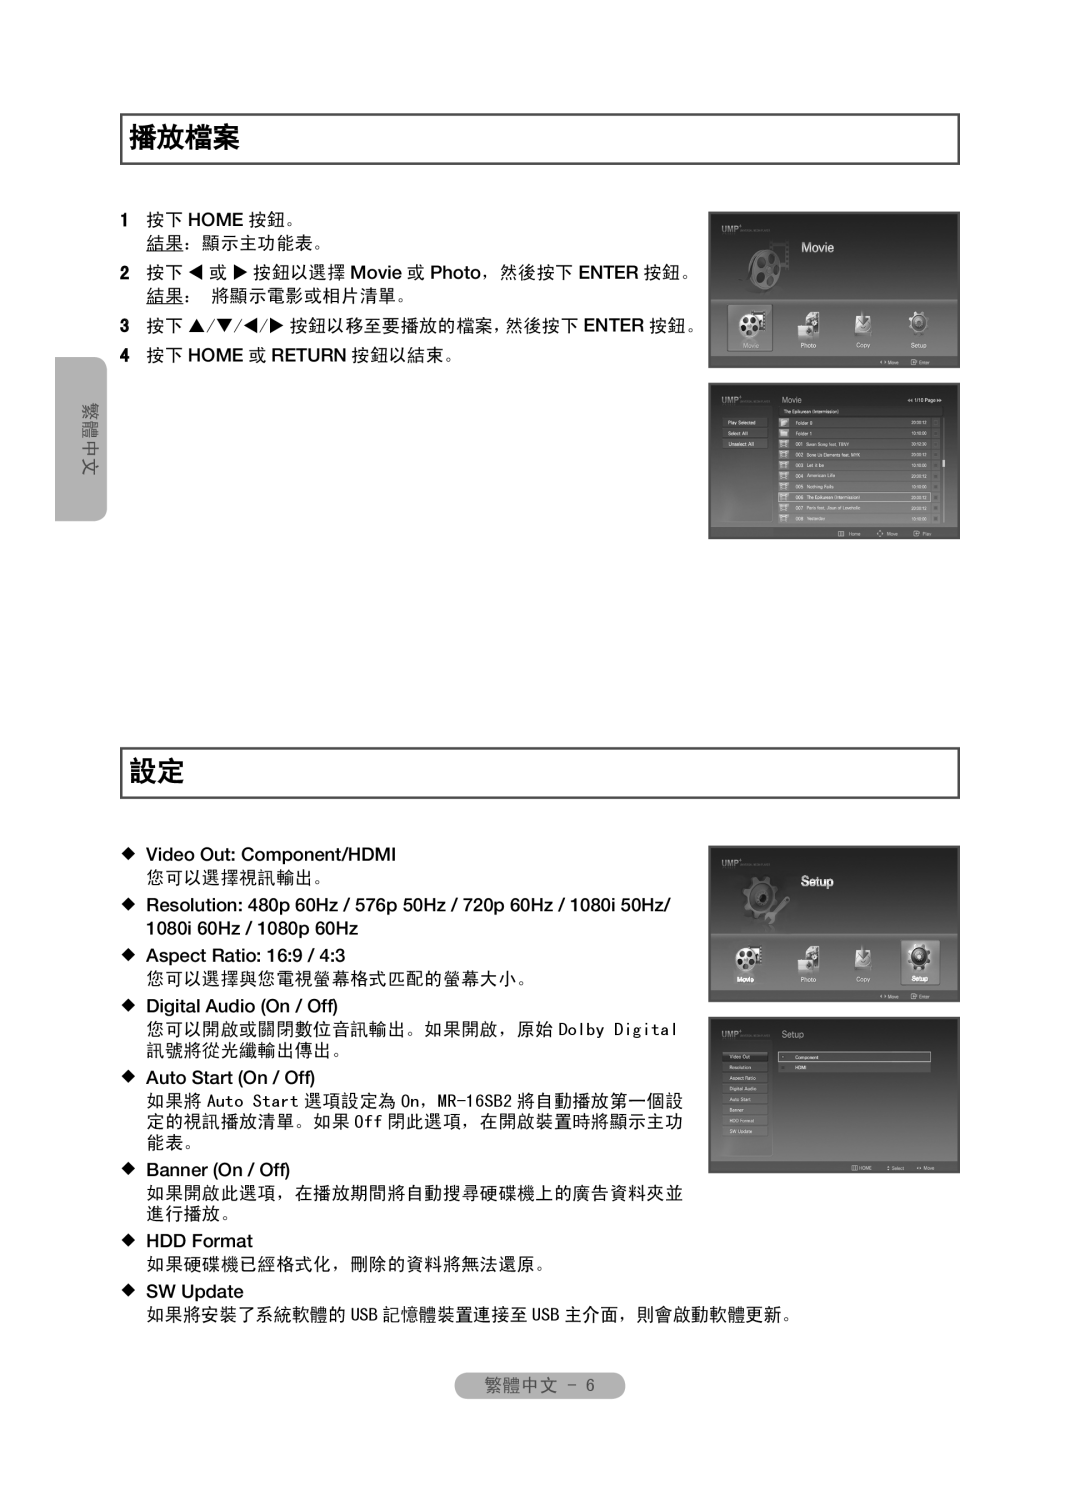 Samsung MR-16SB2 manual 播放檔案, 繁體中文 